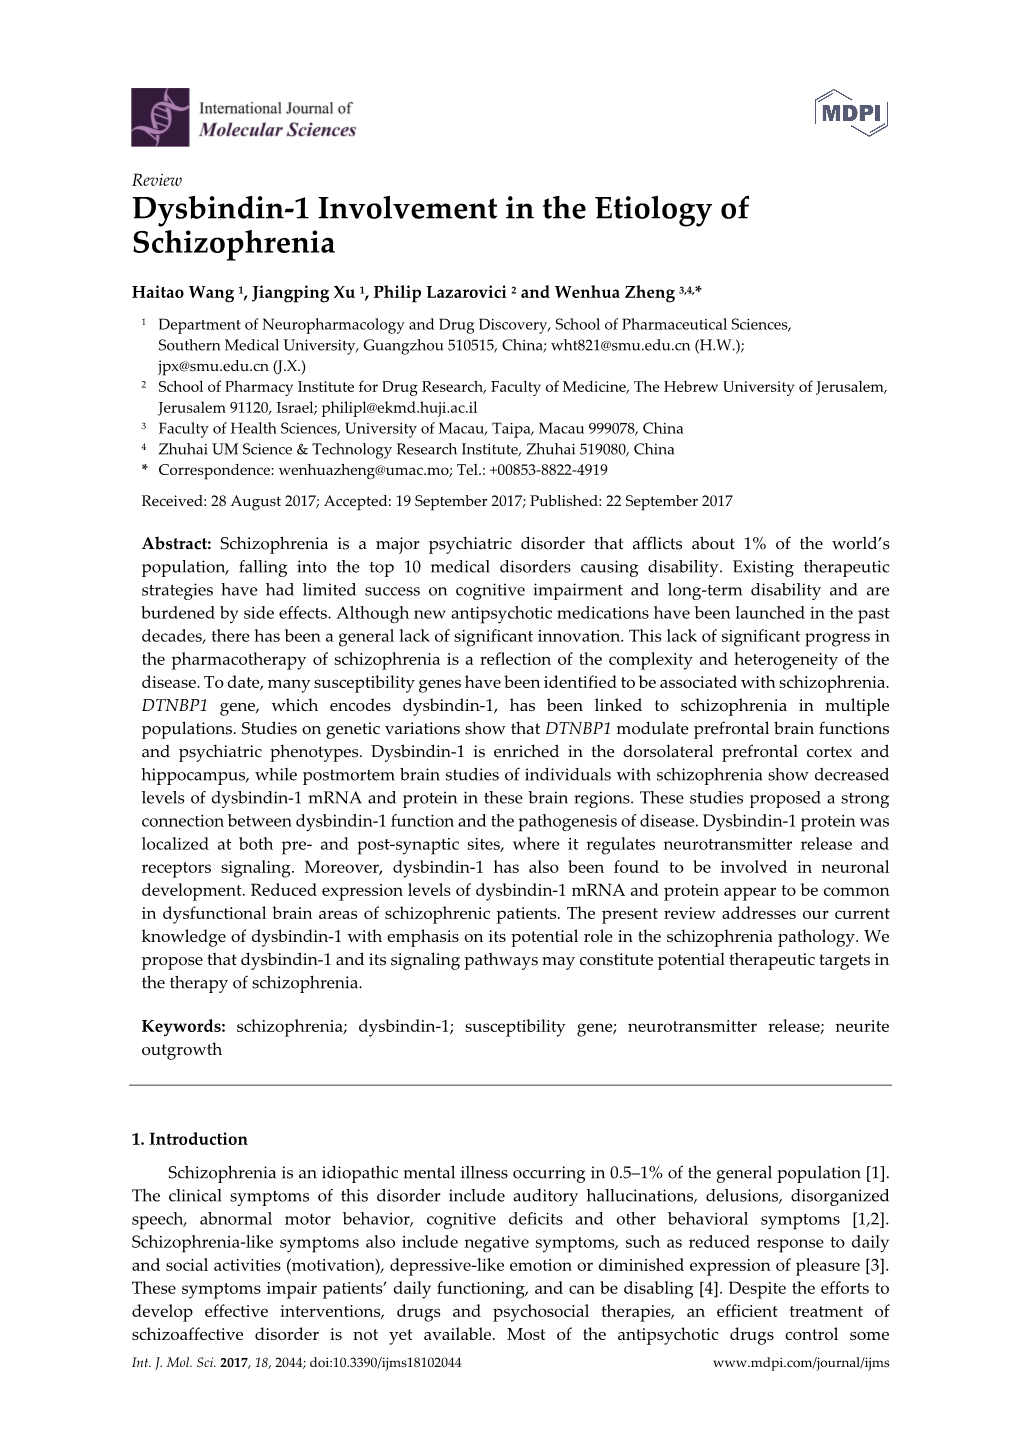 Dysbindin-1 Involvement in the Etiology of Schizophrenia